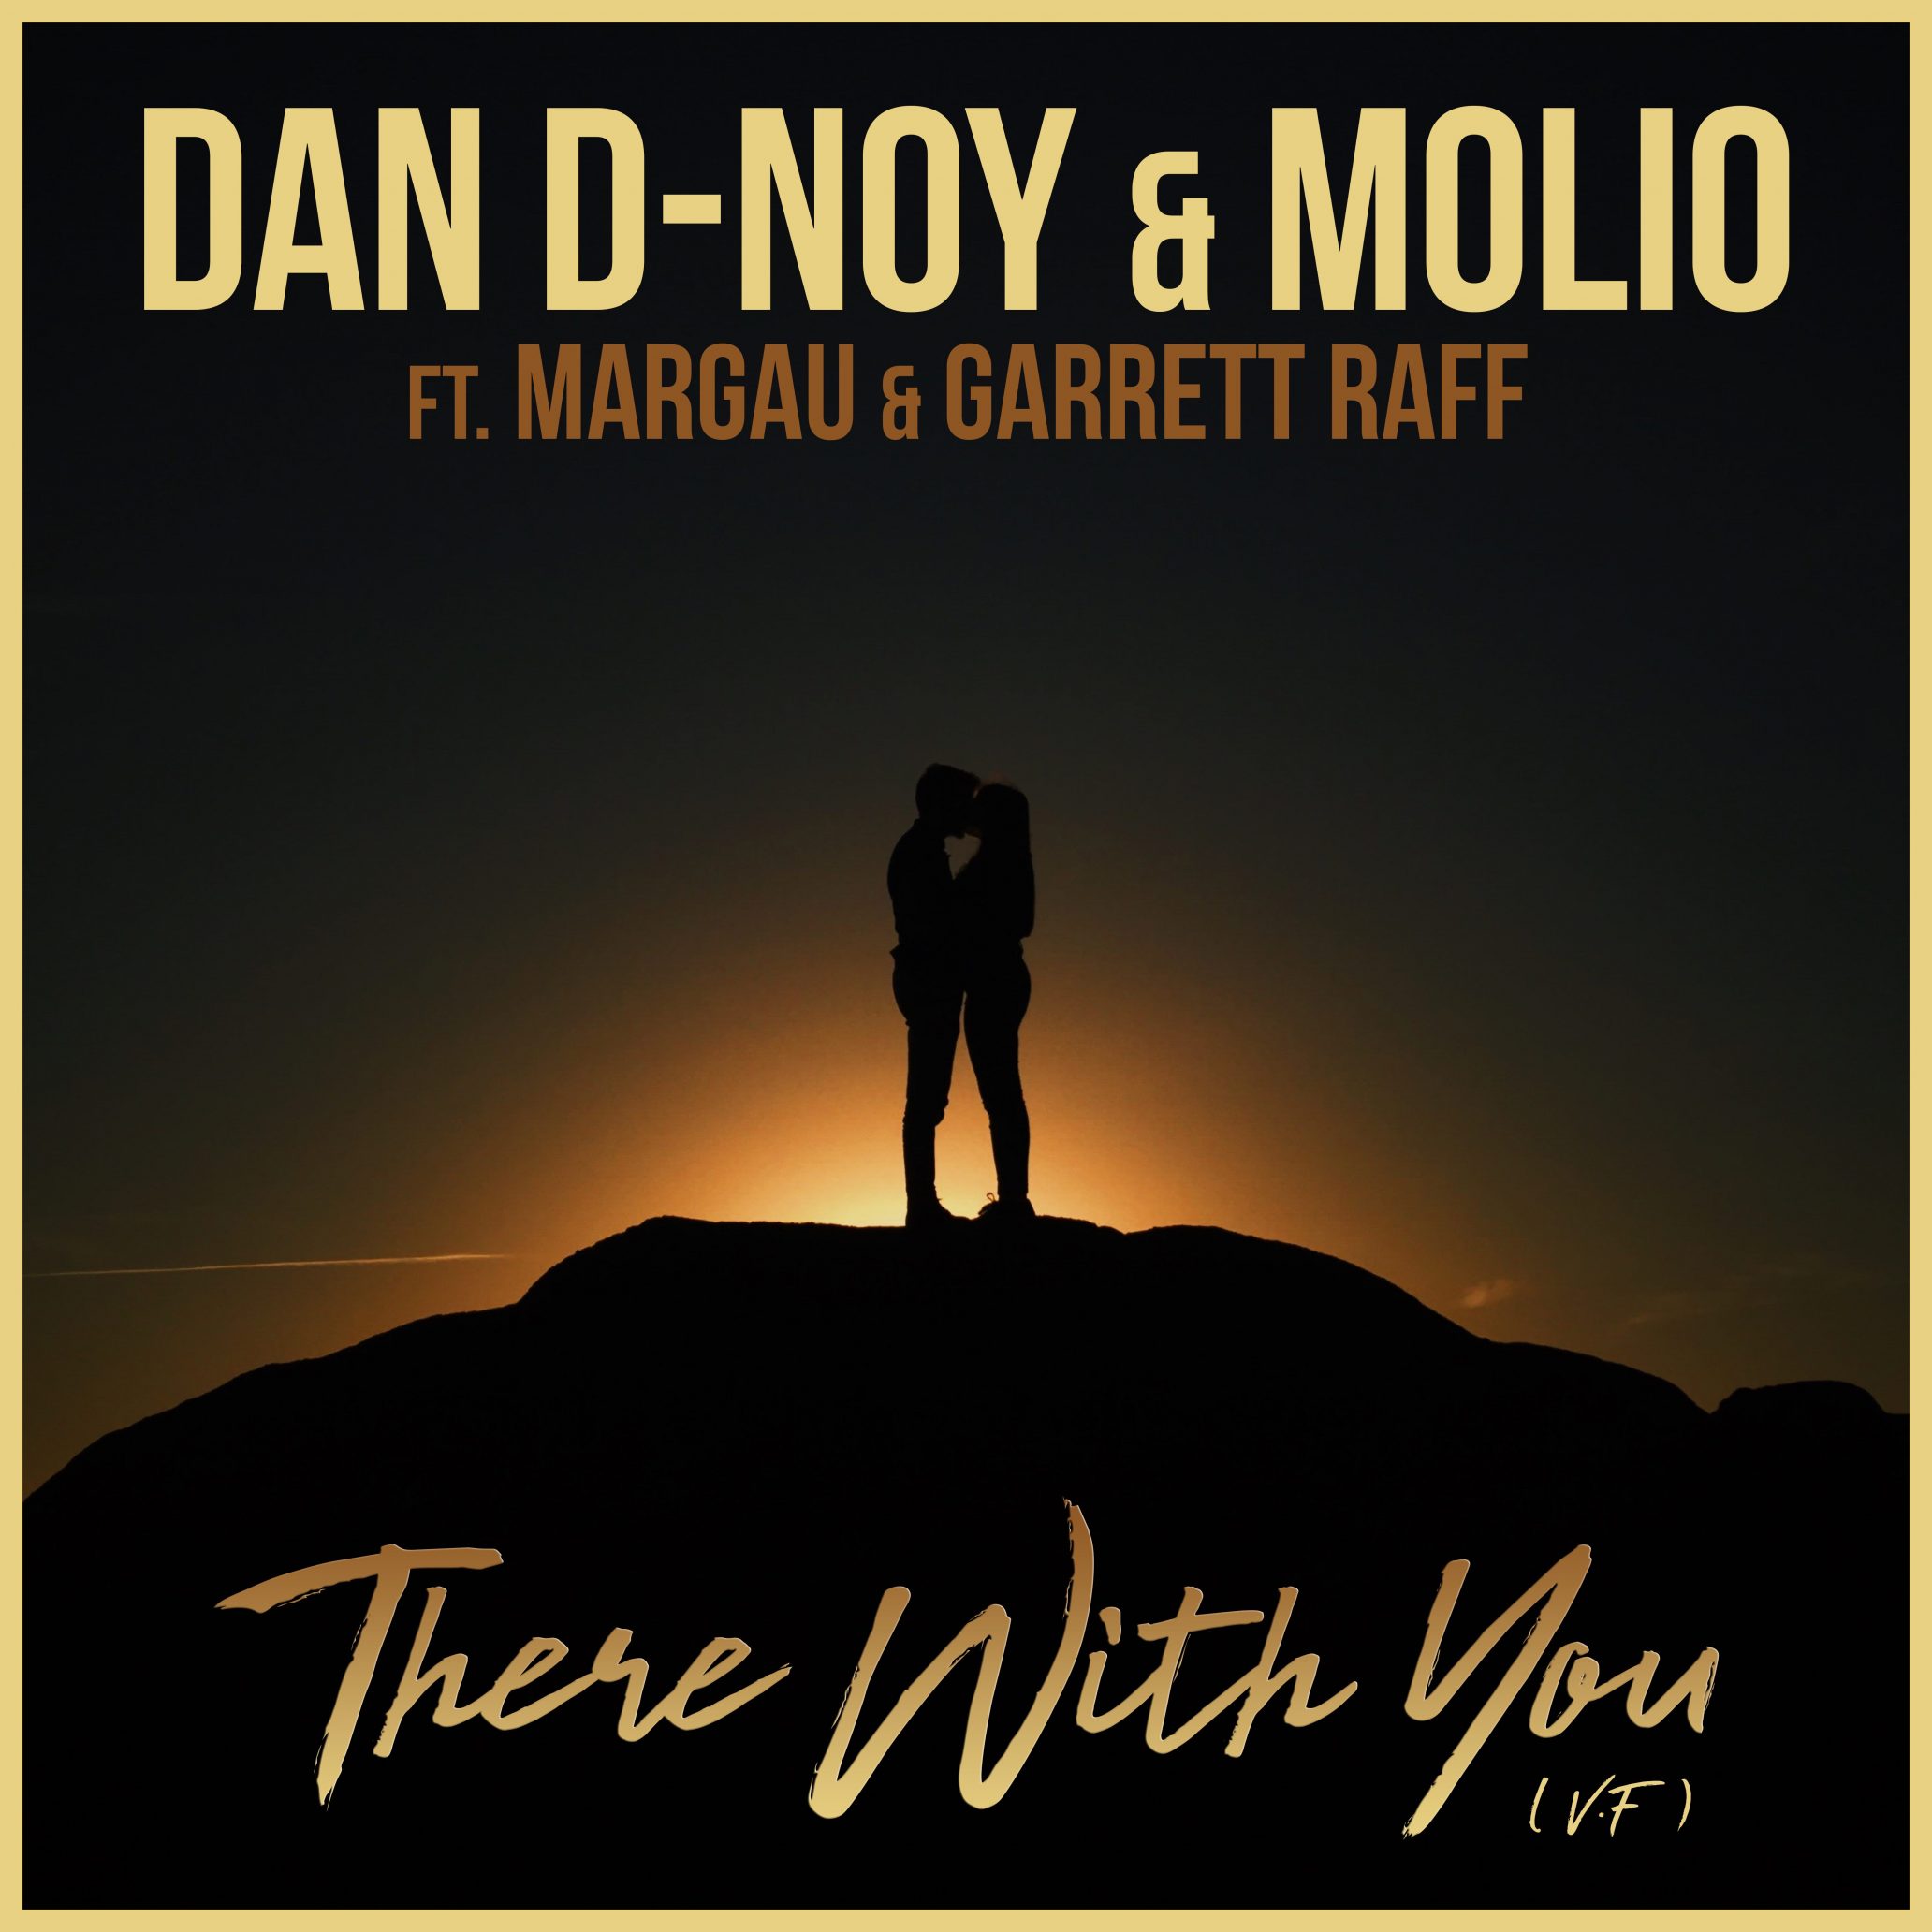 VISUEL CADRÉ - Dan D-Noy & Molio ft Margau & Garrett Raff - There With You(vf) - copie